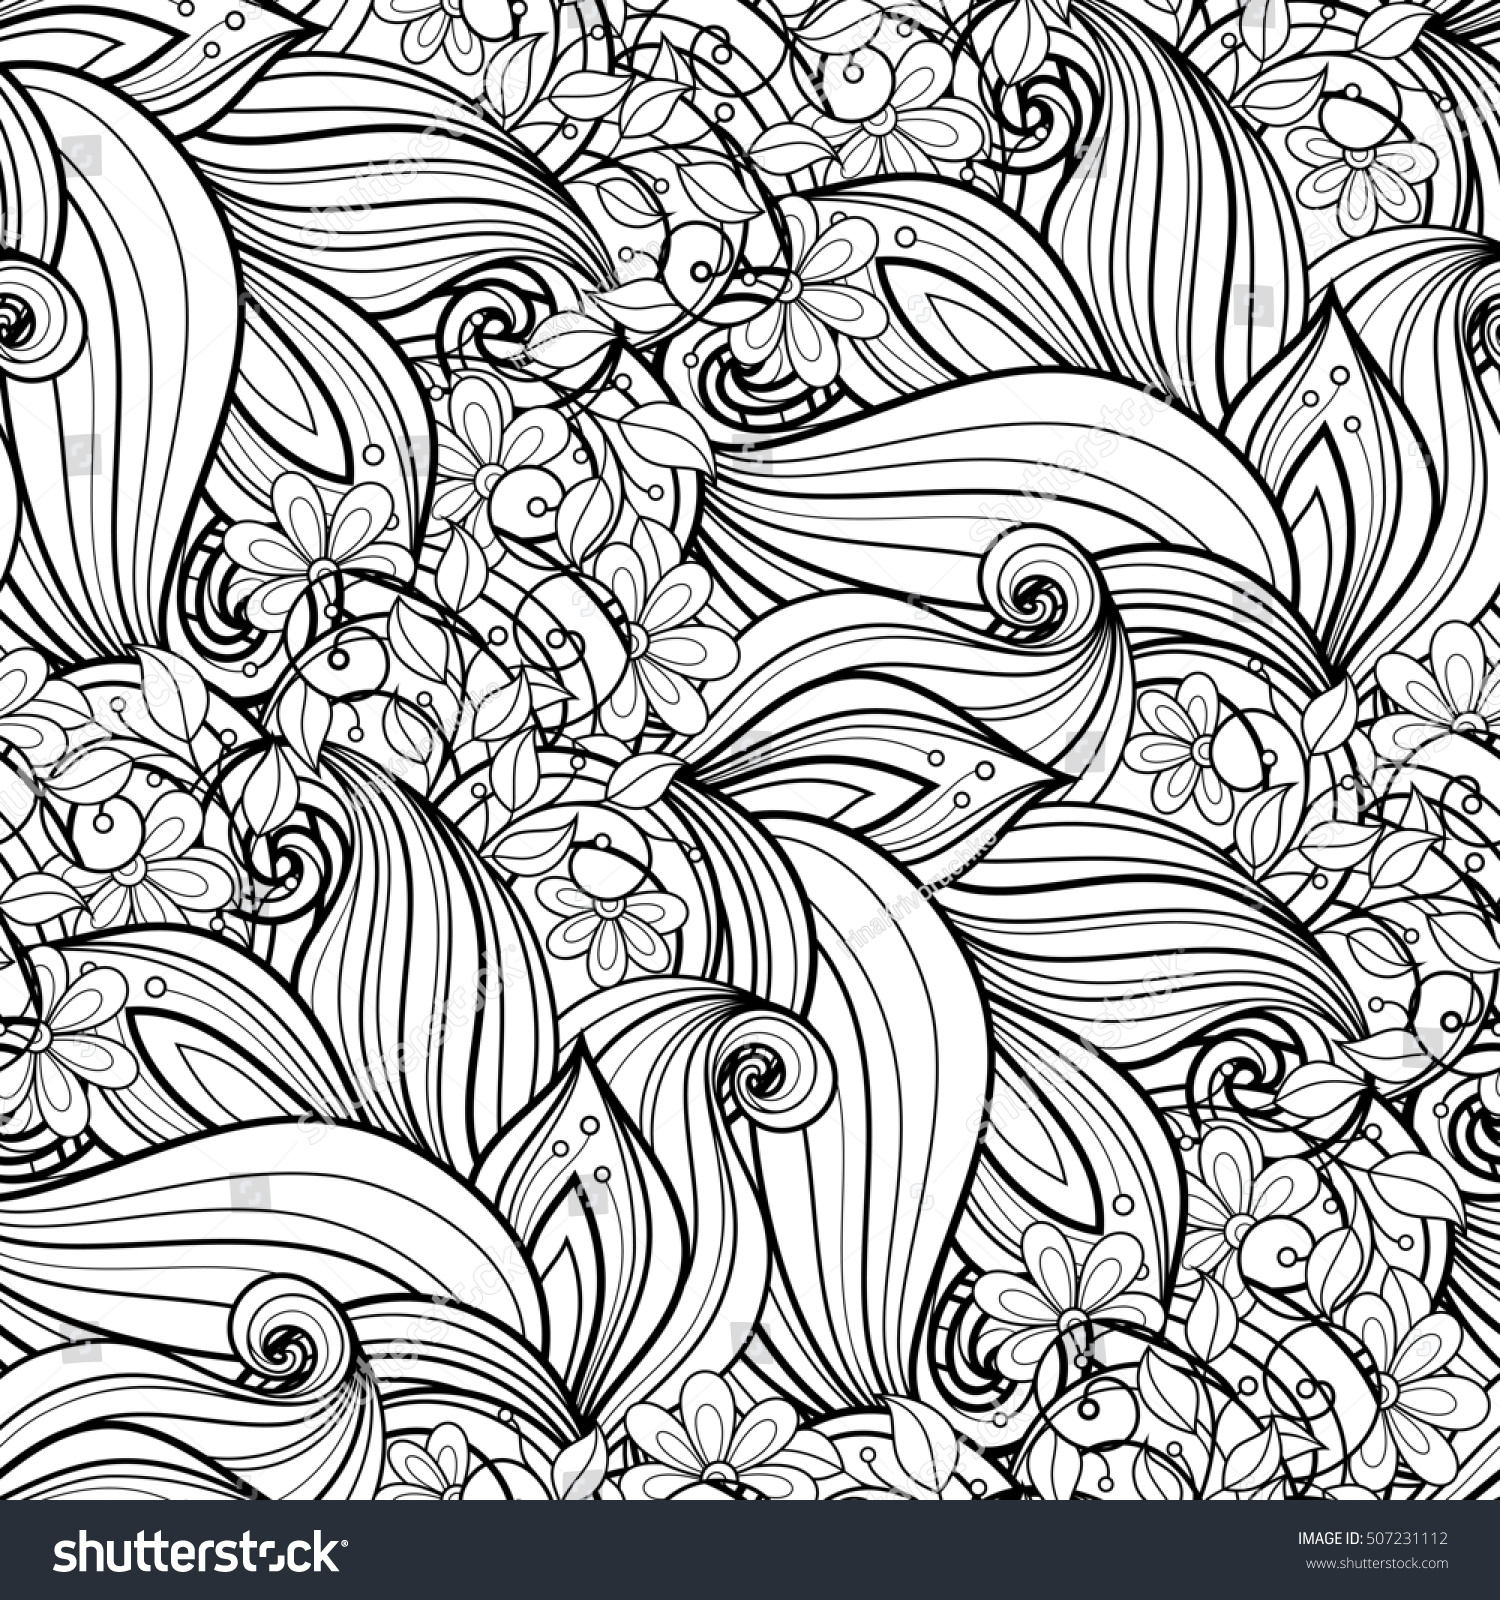 Seamless Monochrome Floral Pattern Hand Drawn Stock Illustration ...